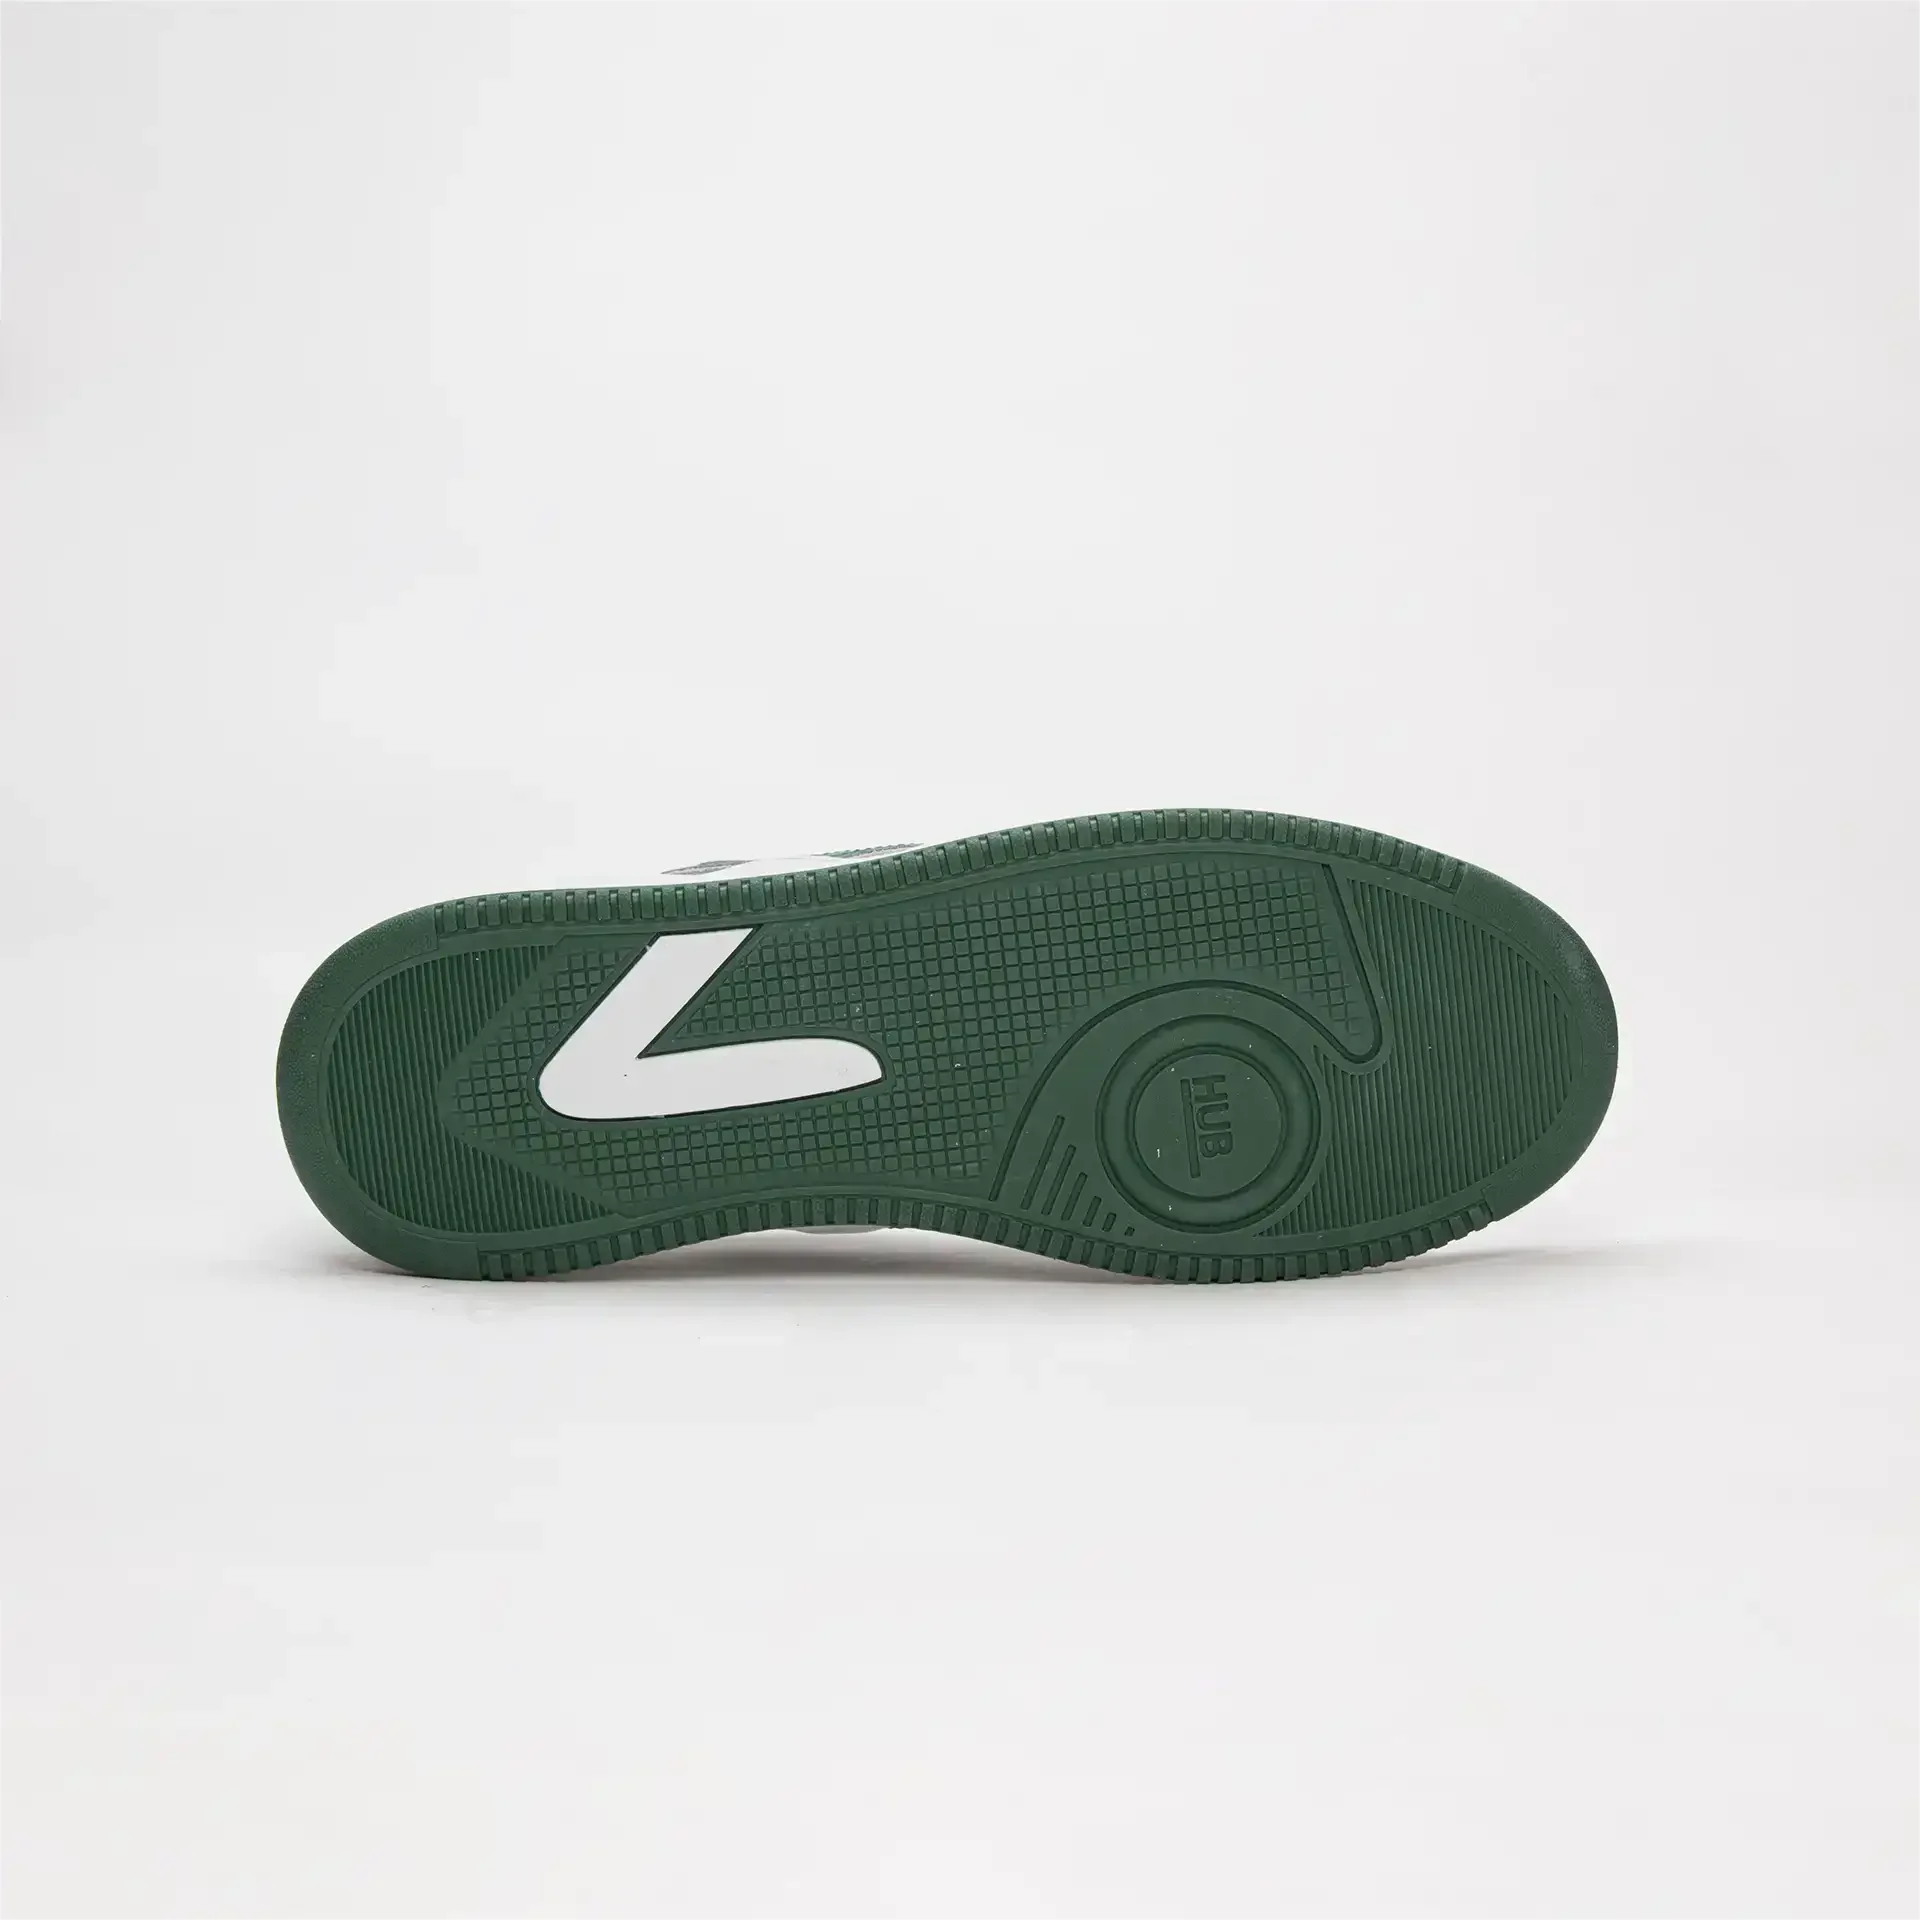 HUB Footwear Smash Sneakers White/Golf Green